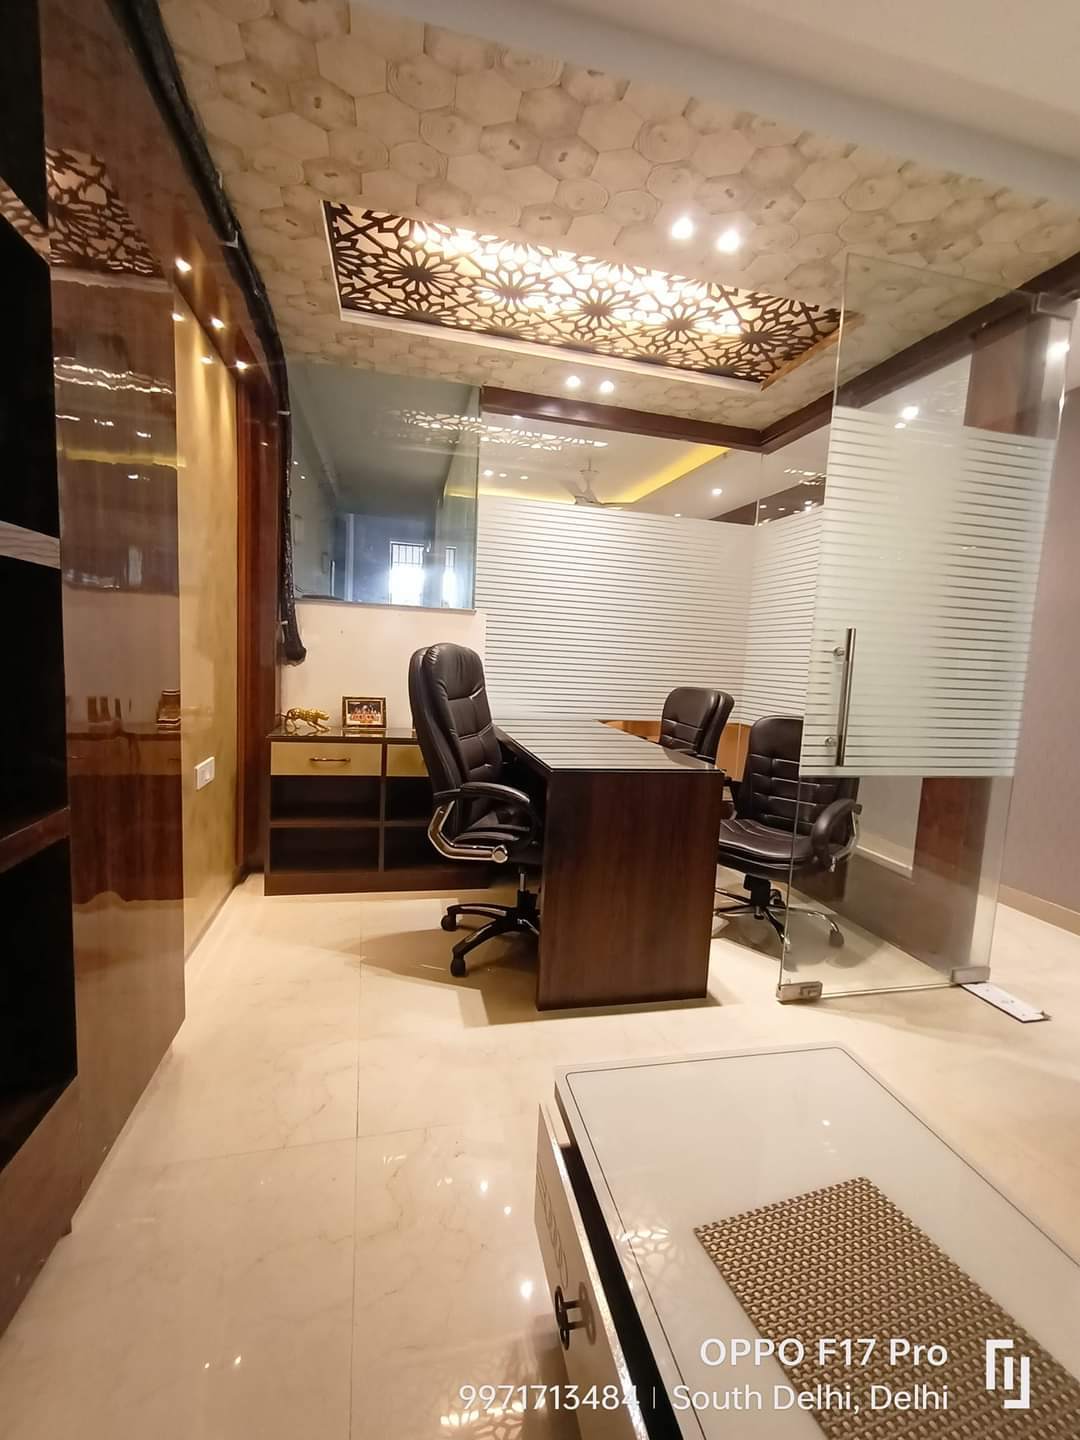 Office/ Shop, 1000 sq ft carpet area, Furnished for rent @Chhatarpur Delhi 